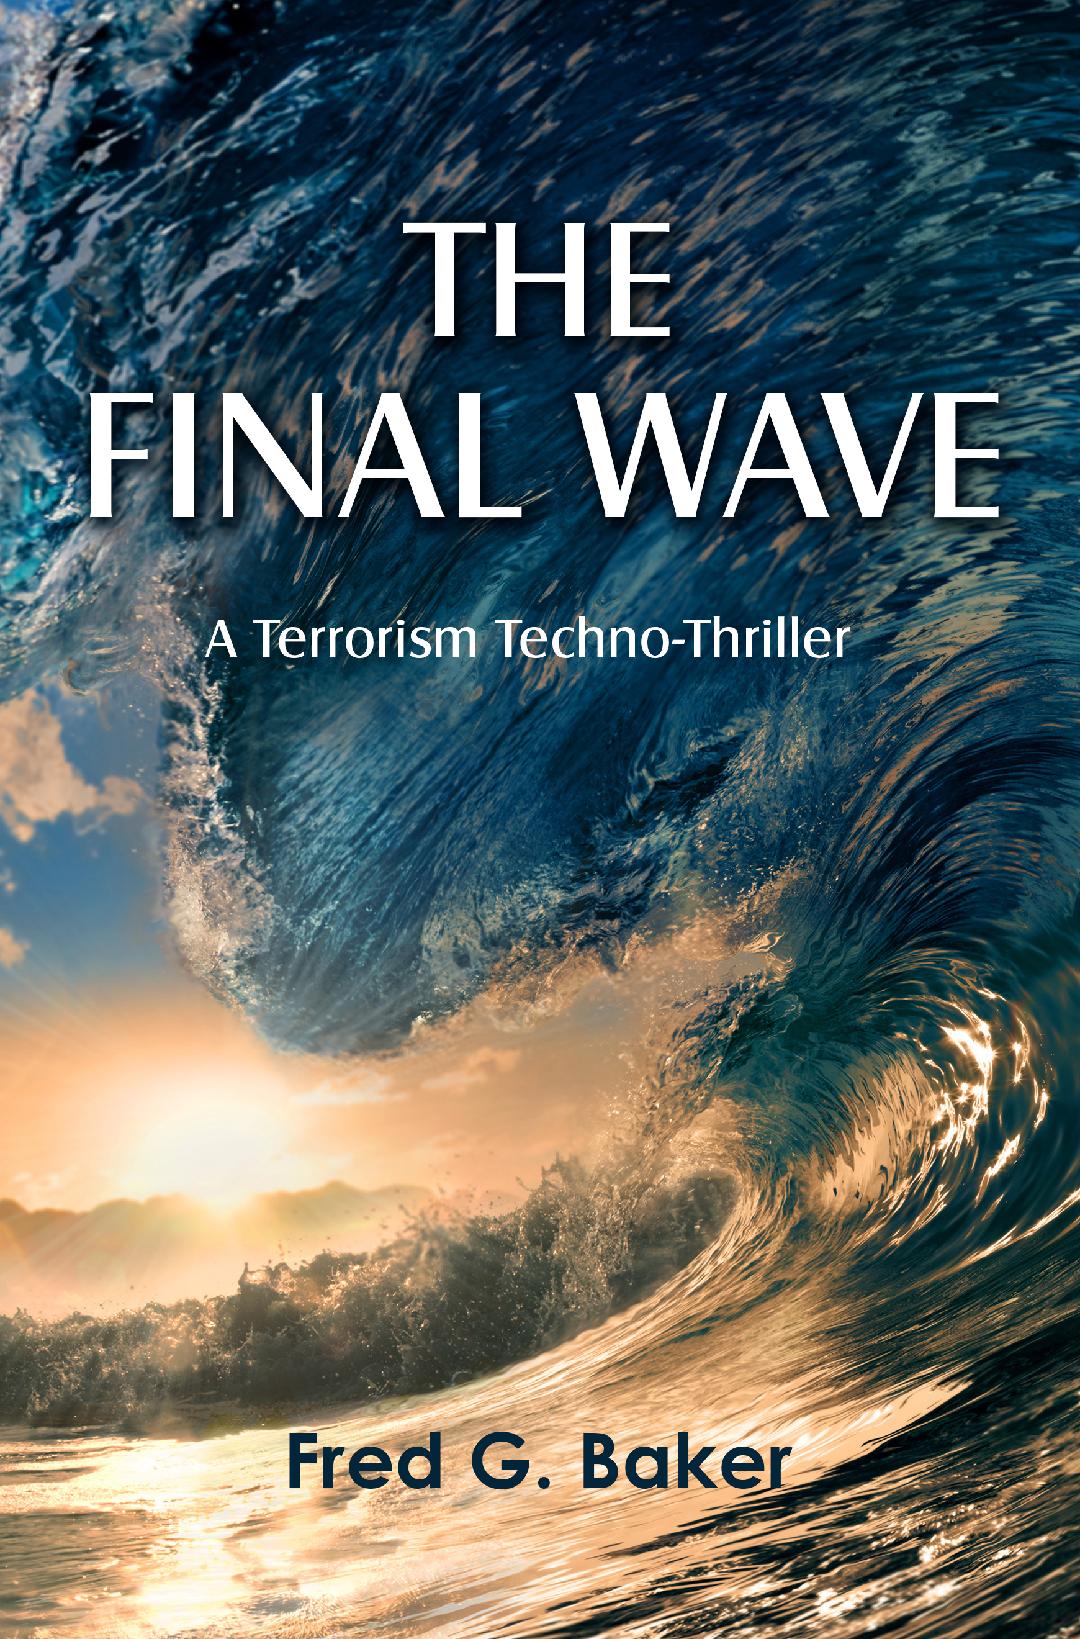 por ejemplo En otras palabras vencimiento THE FINAL WAVE: A Terrorism Techno-Thriller - Other Voices Press, Fred  Baker, Author